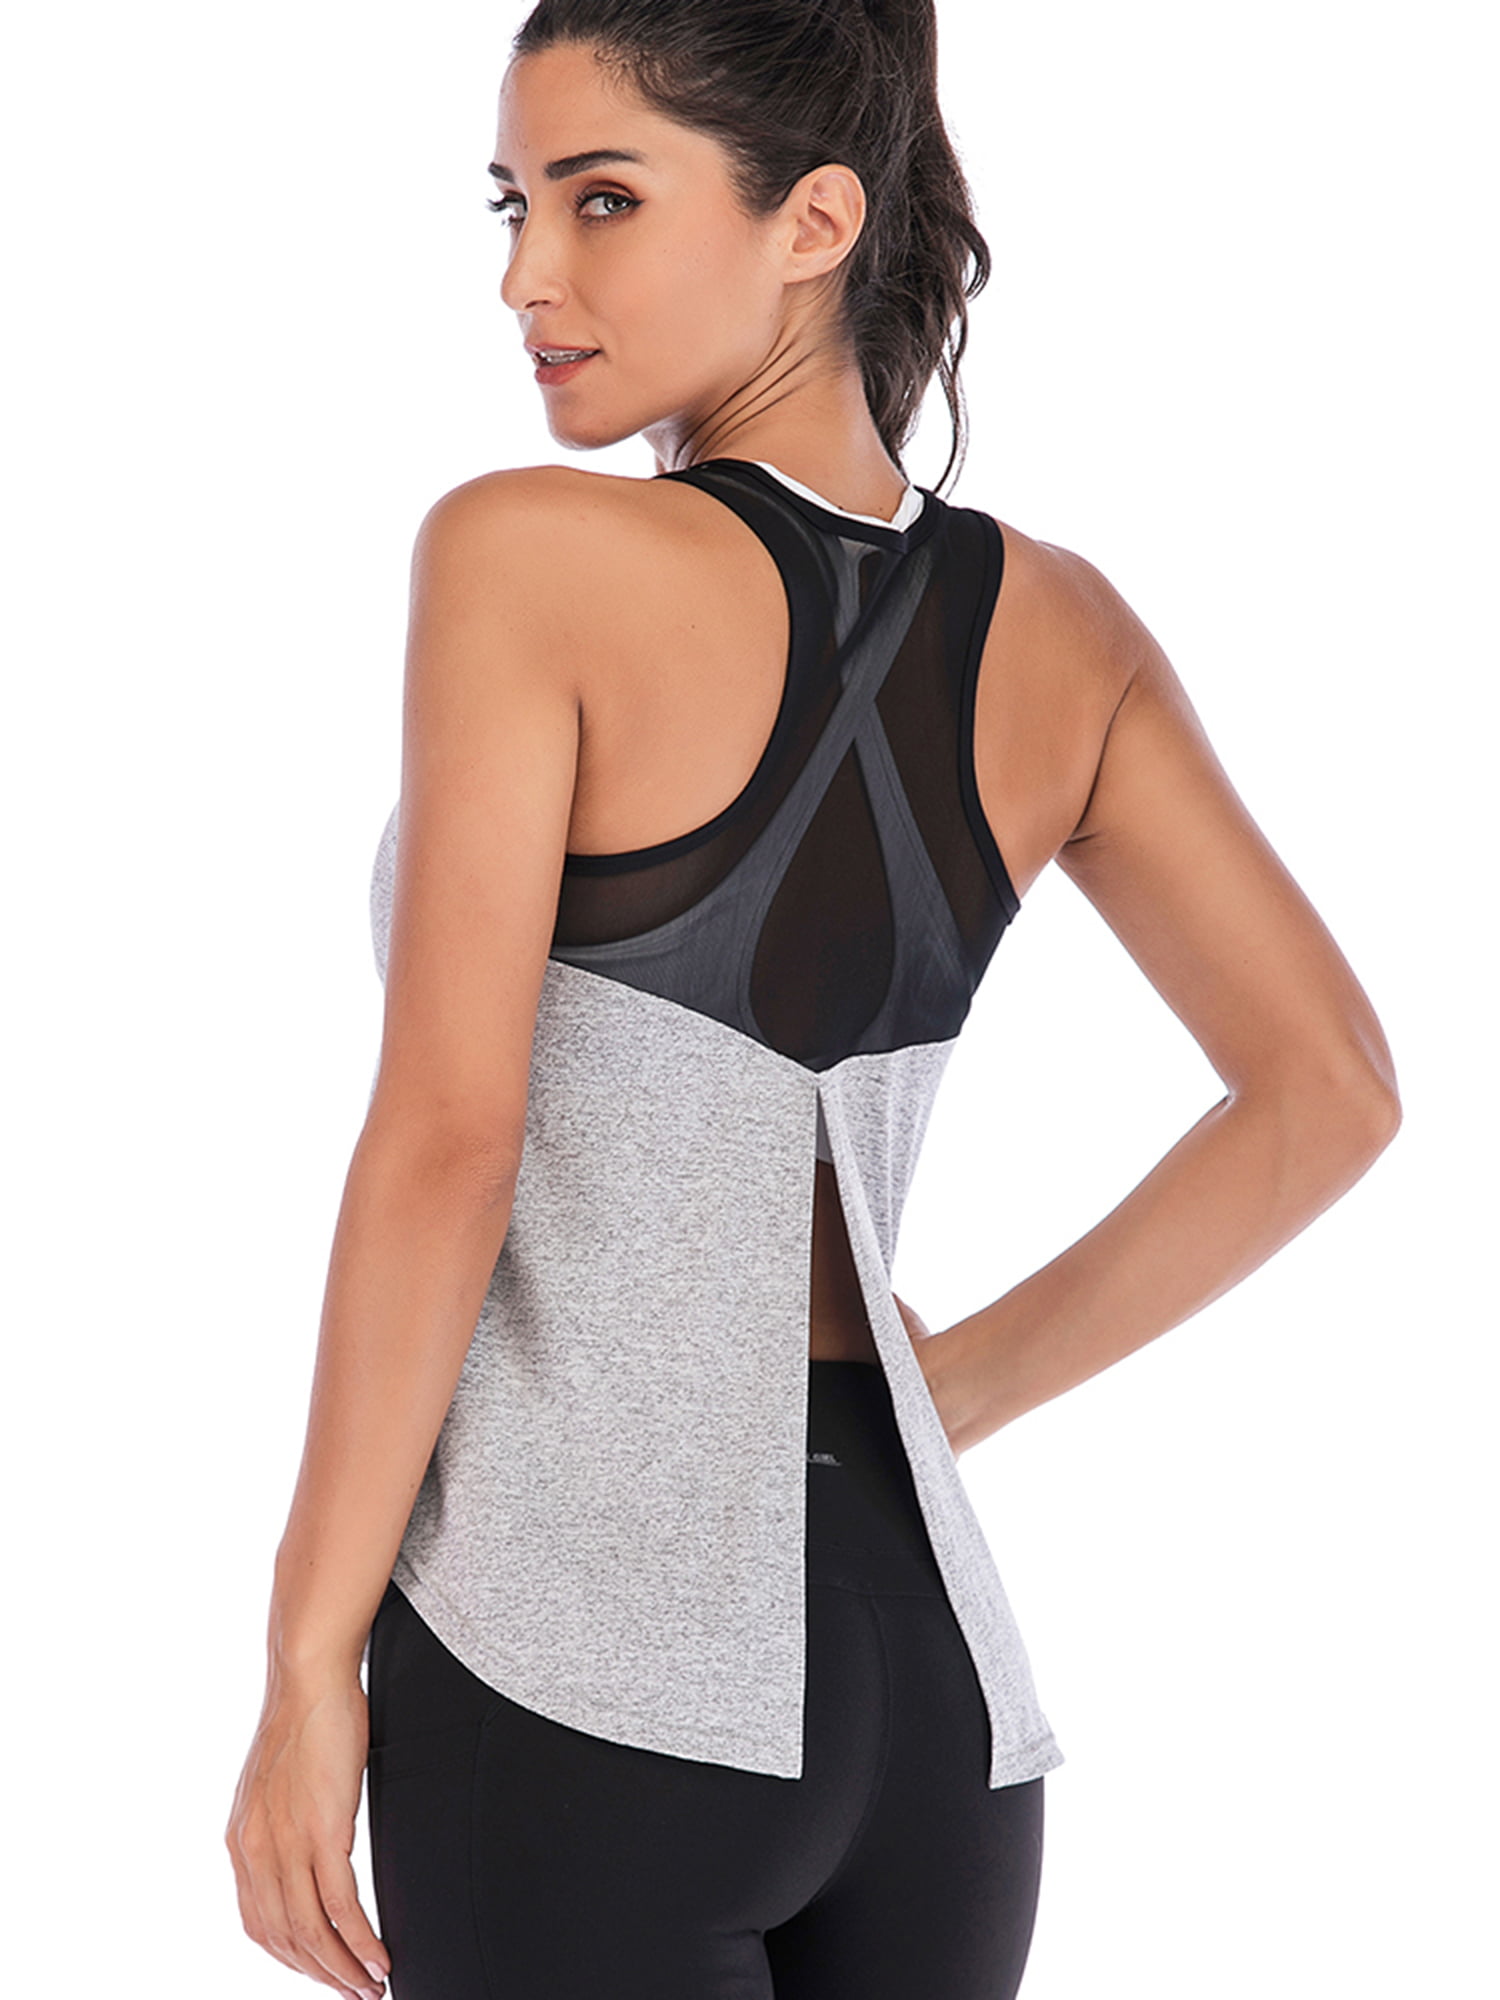 1 2 3 Pcs Open Back Sport Vest Workout Tank Tops For Women Athletic Exercise Yoga Tops Running